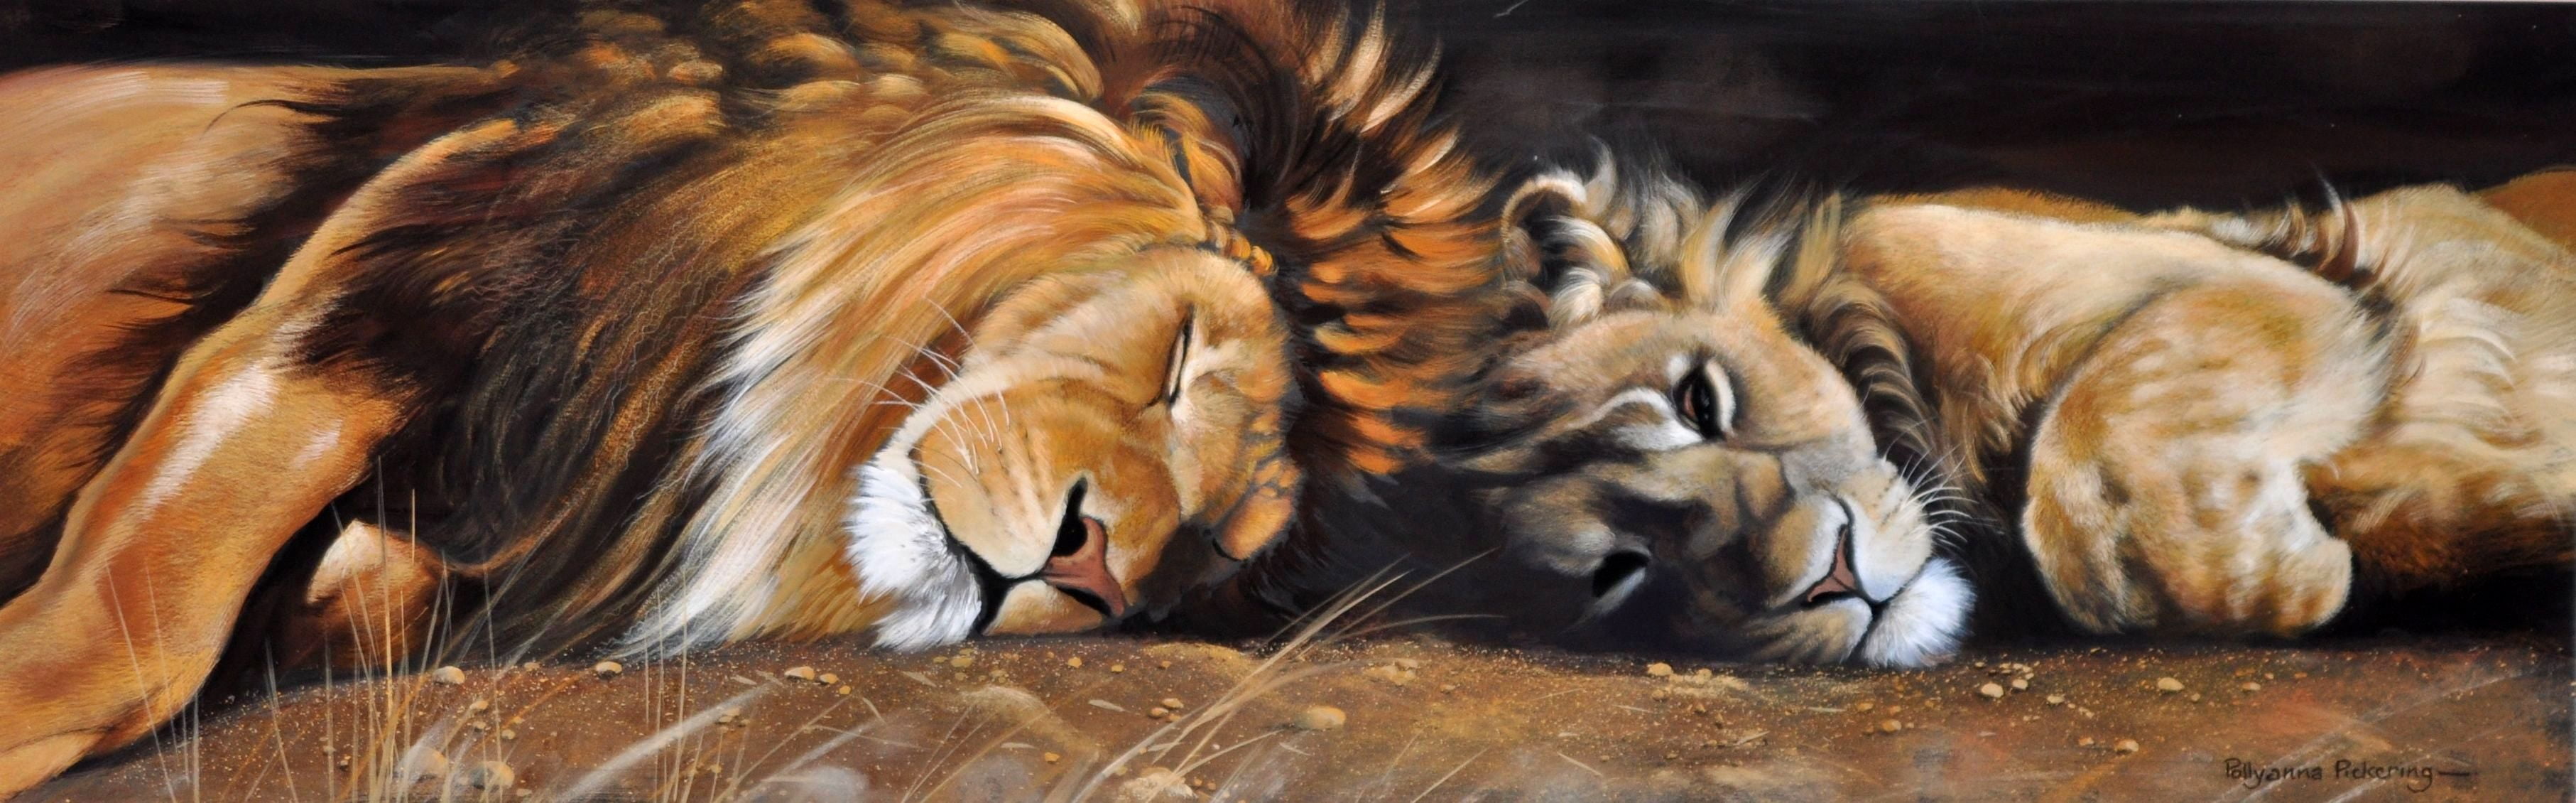 brown lion illustration, animals, cats, sleep, predators, picture